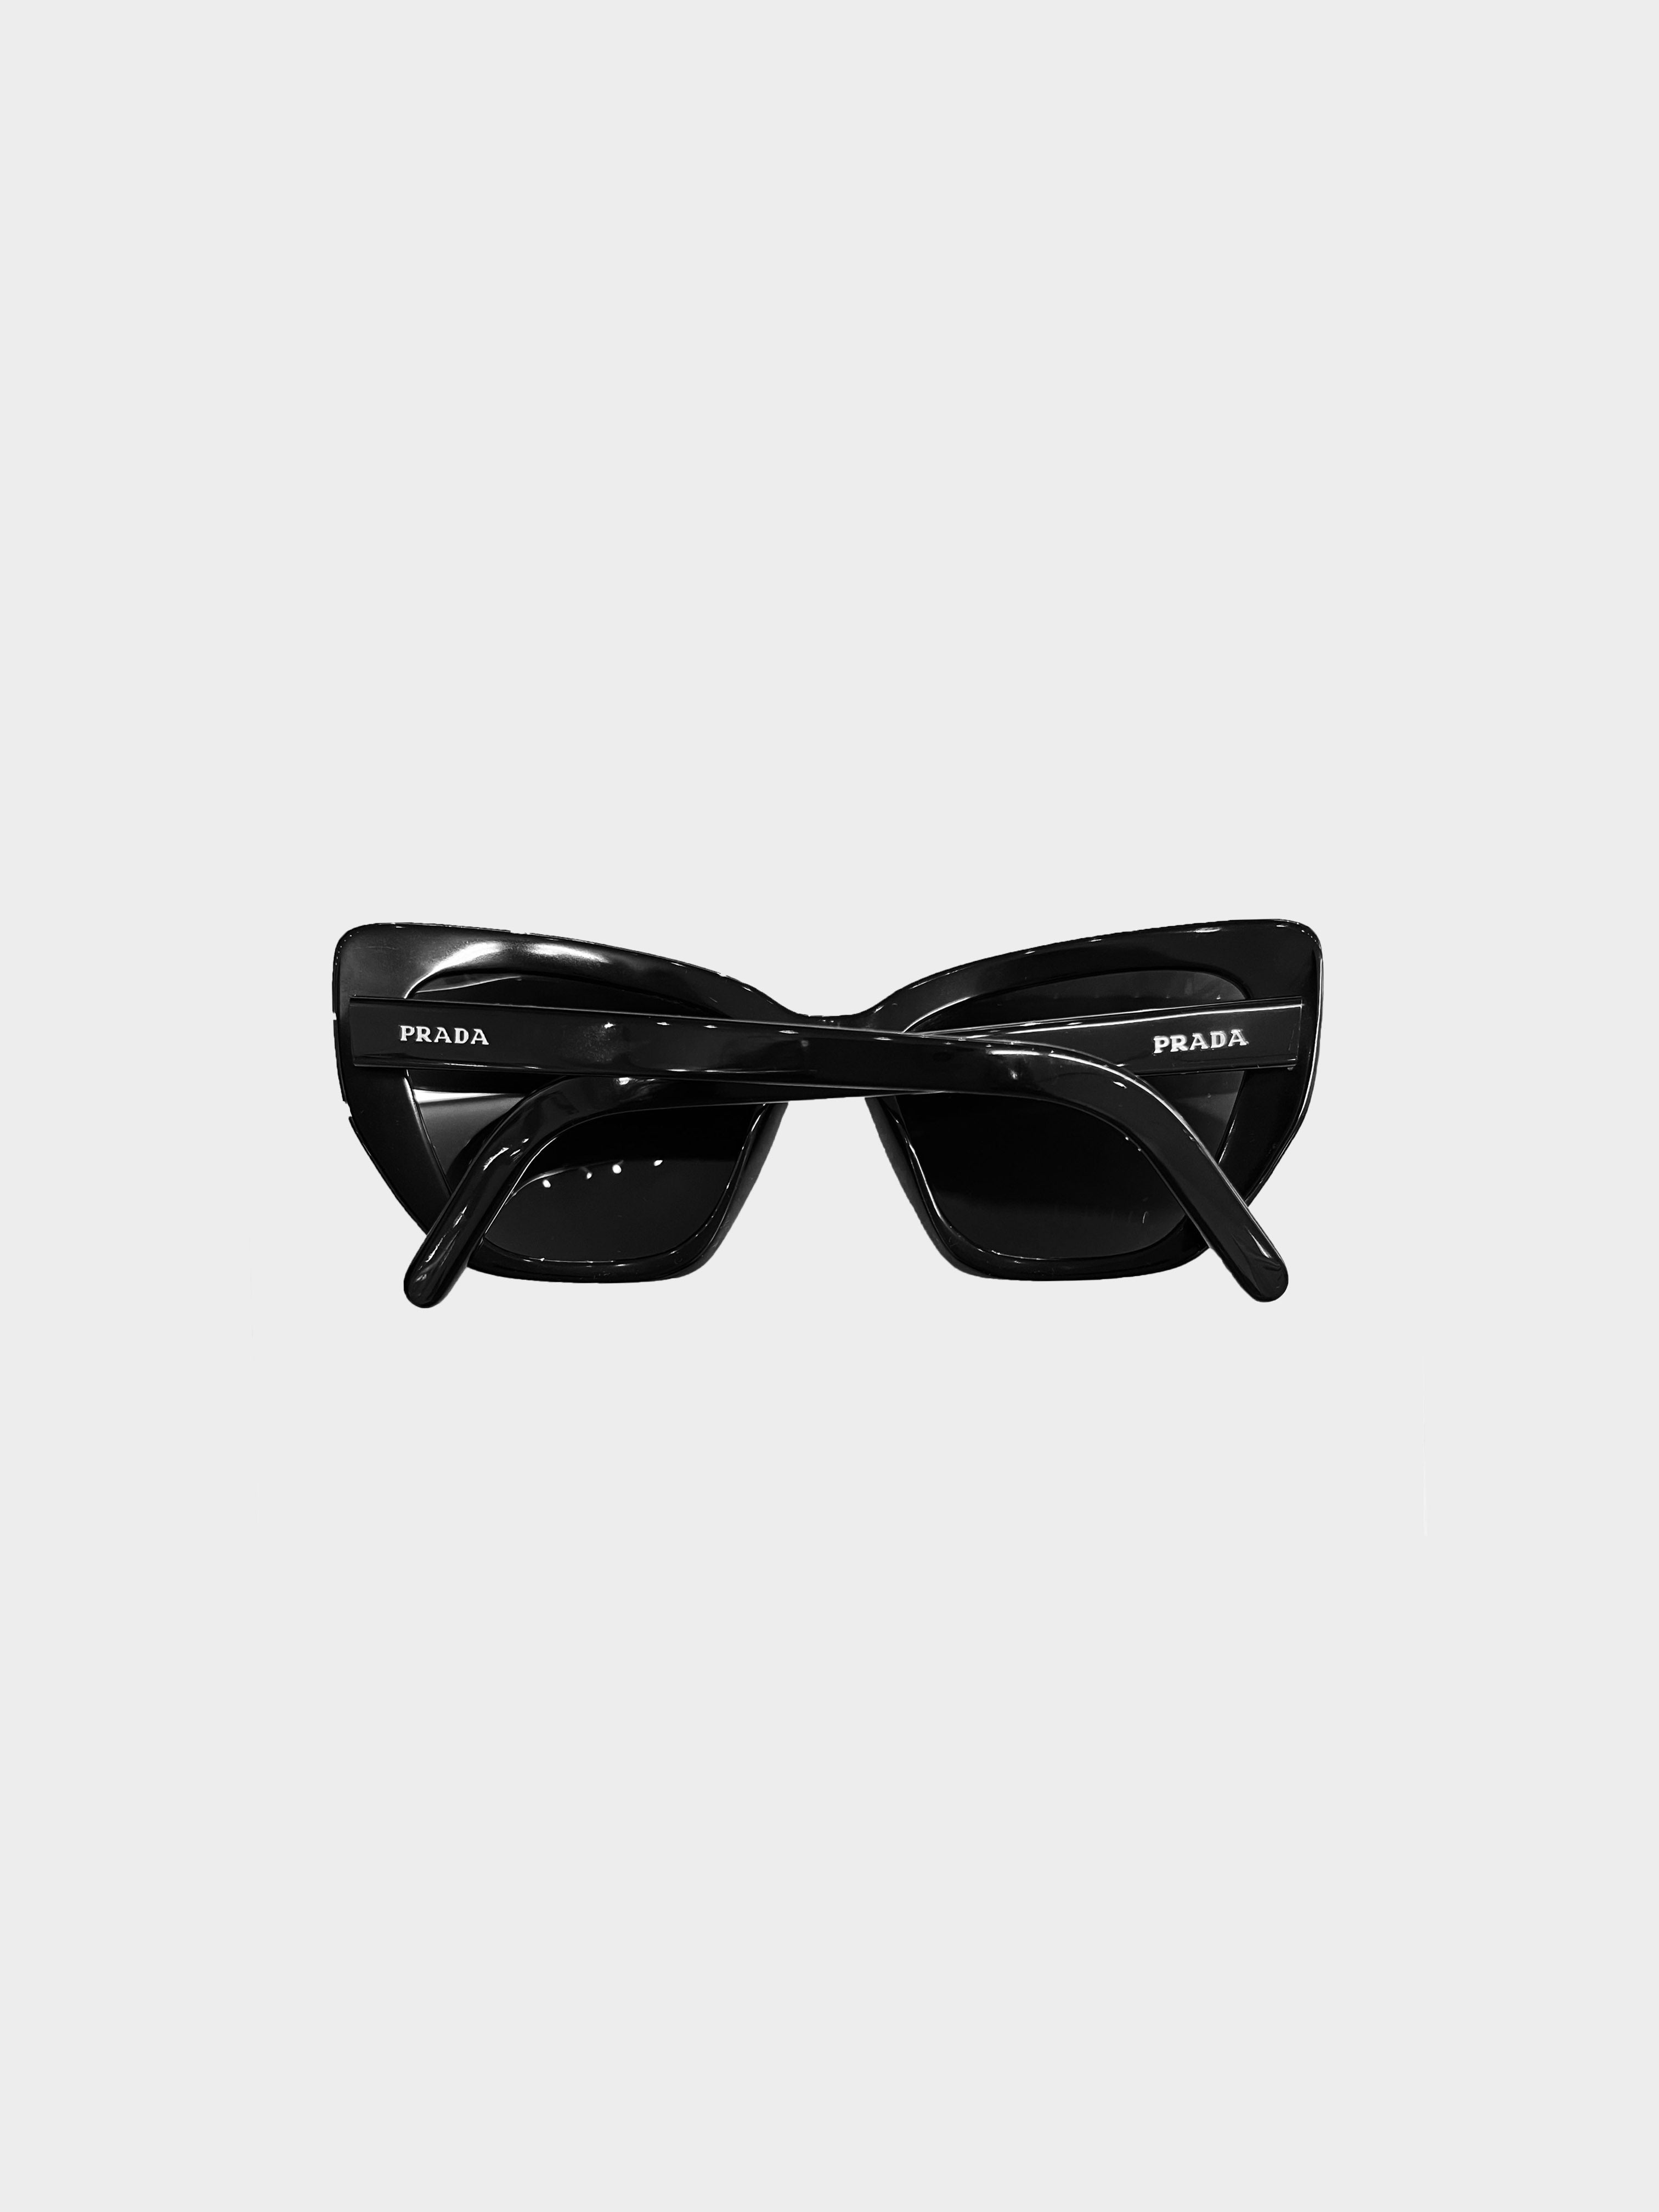 Prada 2010s Black Cat Eye Sunglasses